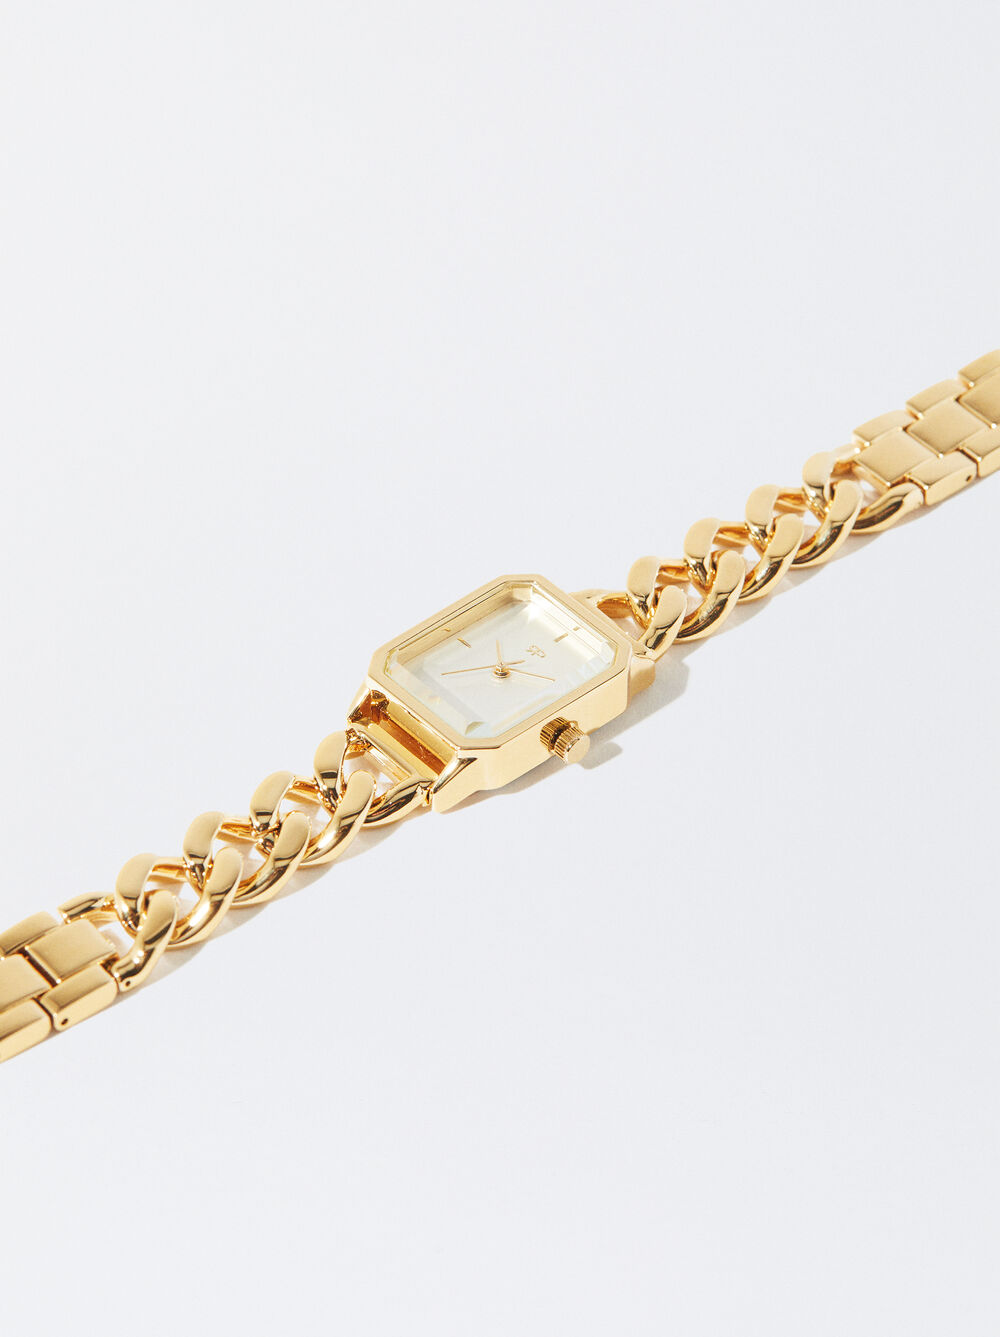 Gold Watch With Link Bracelet image number 1.0